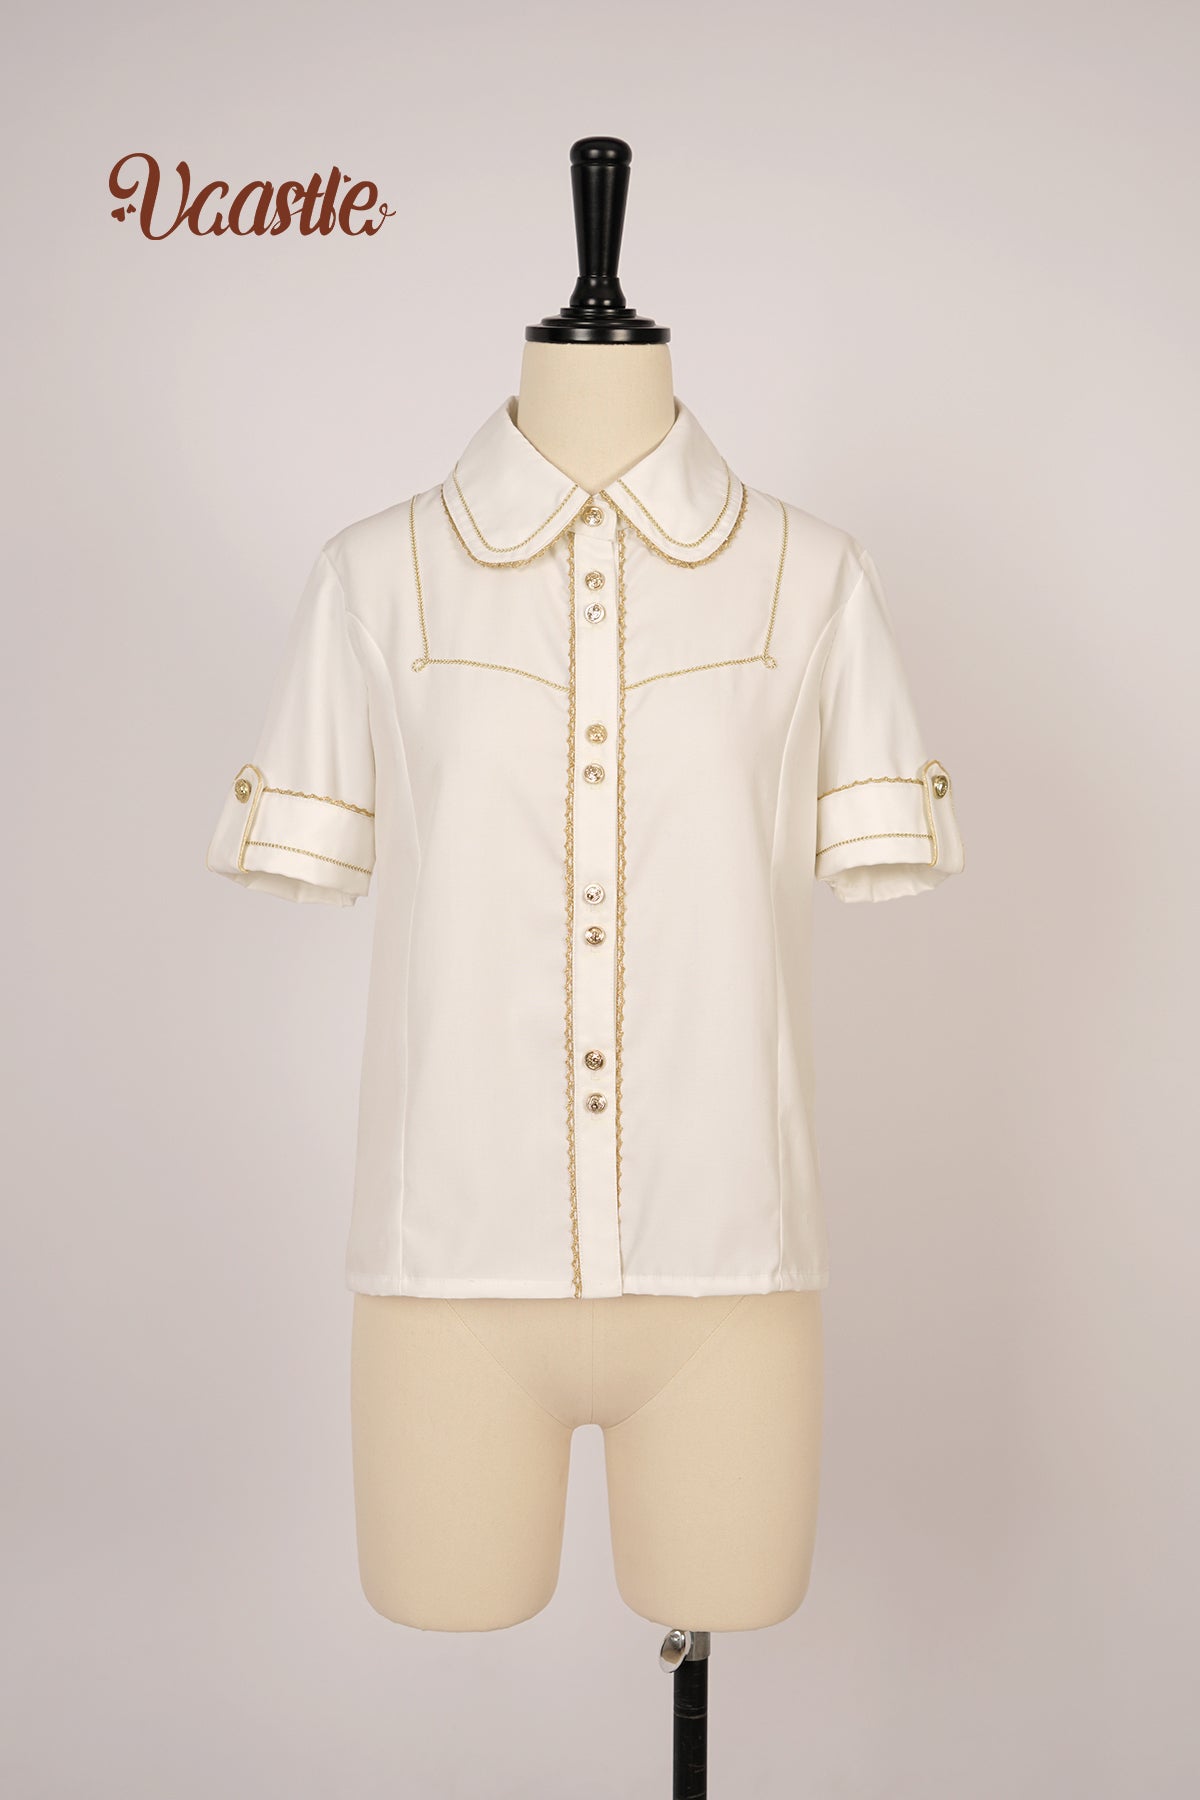 Vcastle~Mocha Choc~Kawaii Lolita OP Dress Multicolors S white short sleeve shirt 